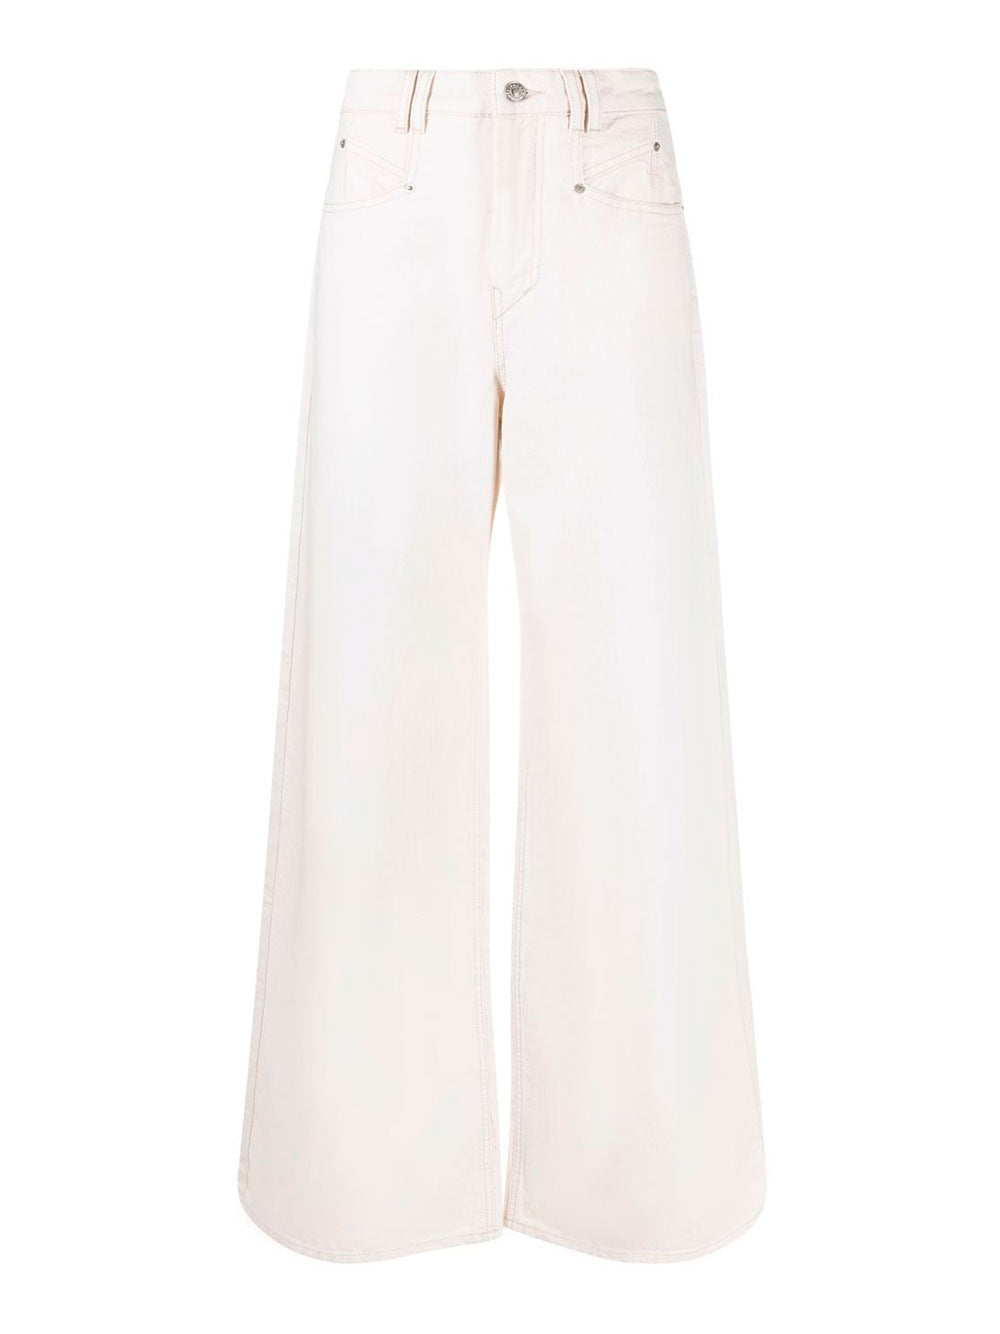 Isabel Marant white jeans 